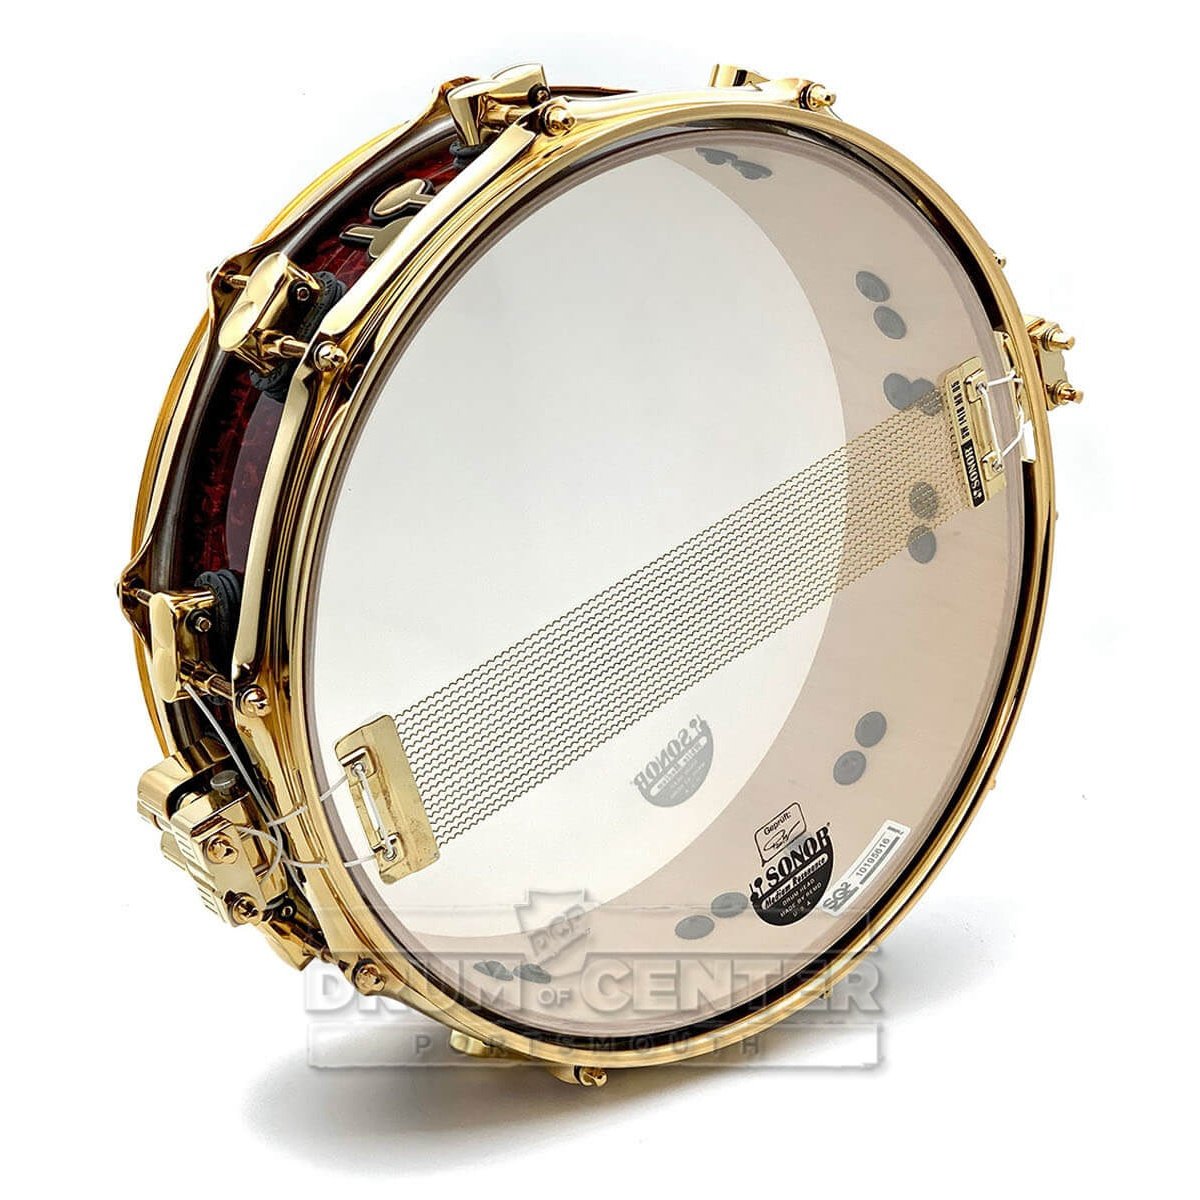 Sonor SQ2 Maple Medium Snare Drum 14x4.25 Birdseye Cherry Gloss w/Gold Hardware